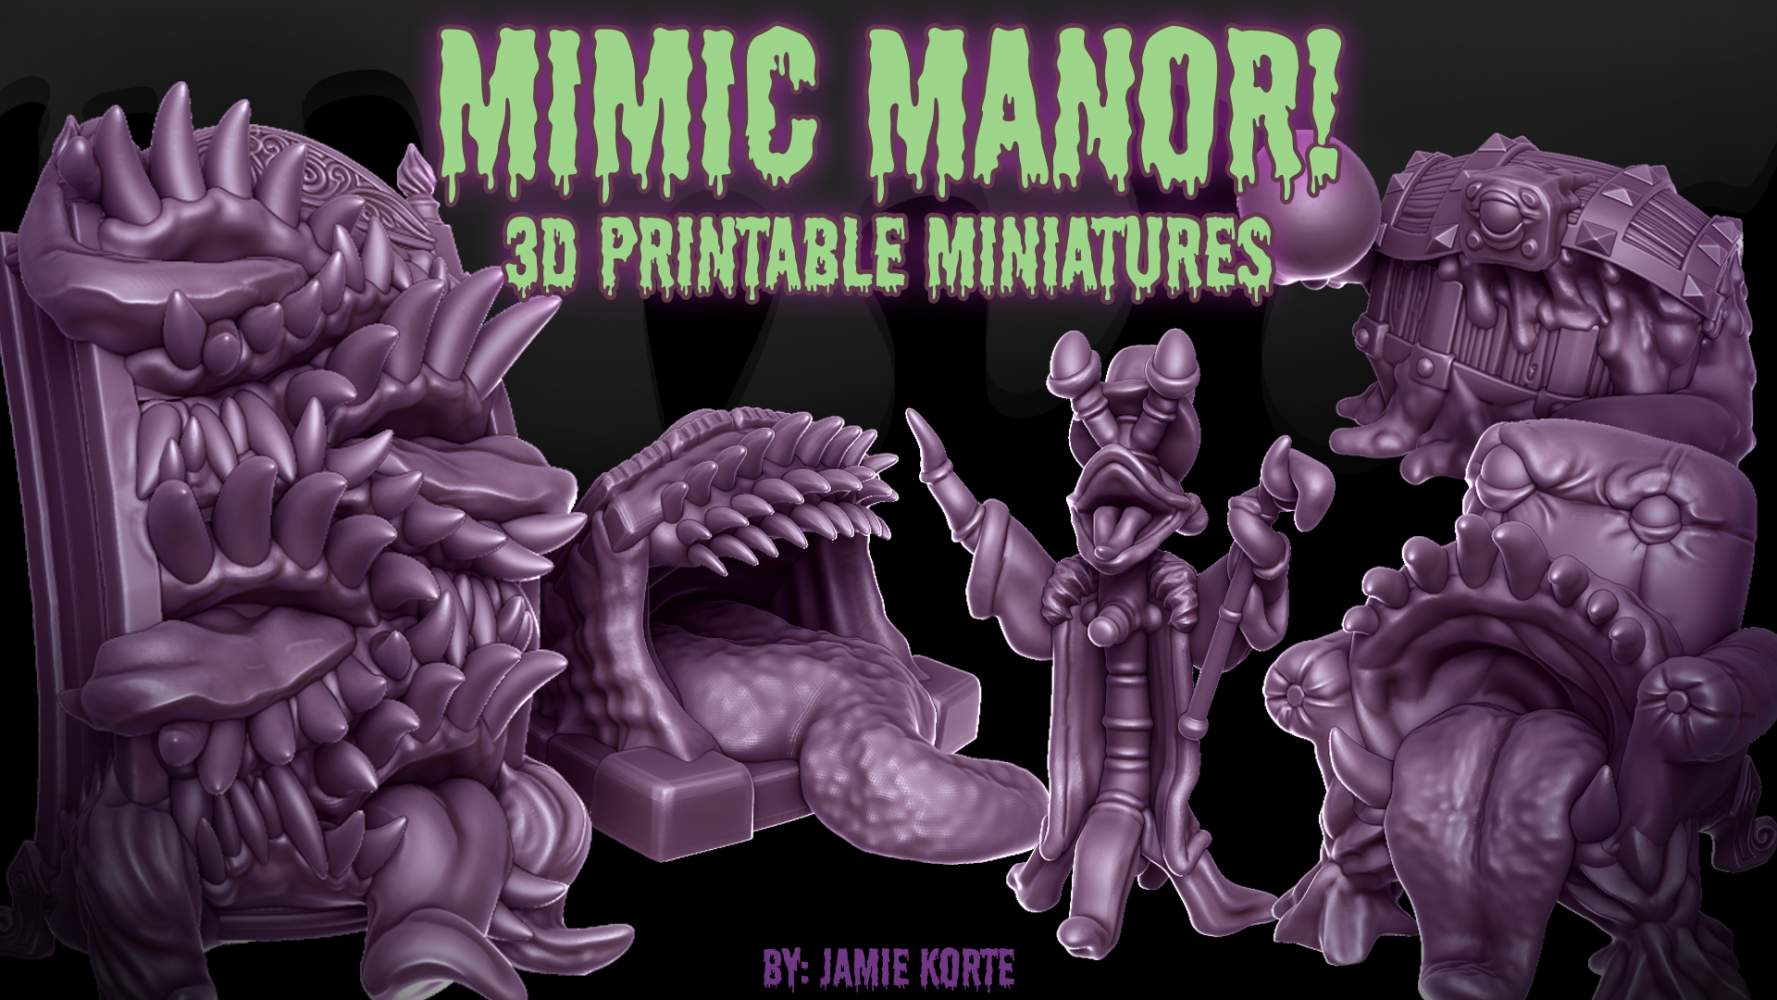 Mimic Manor!